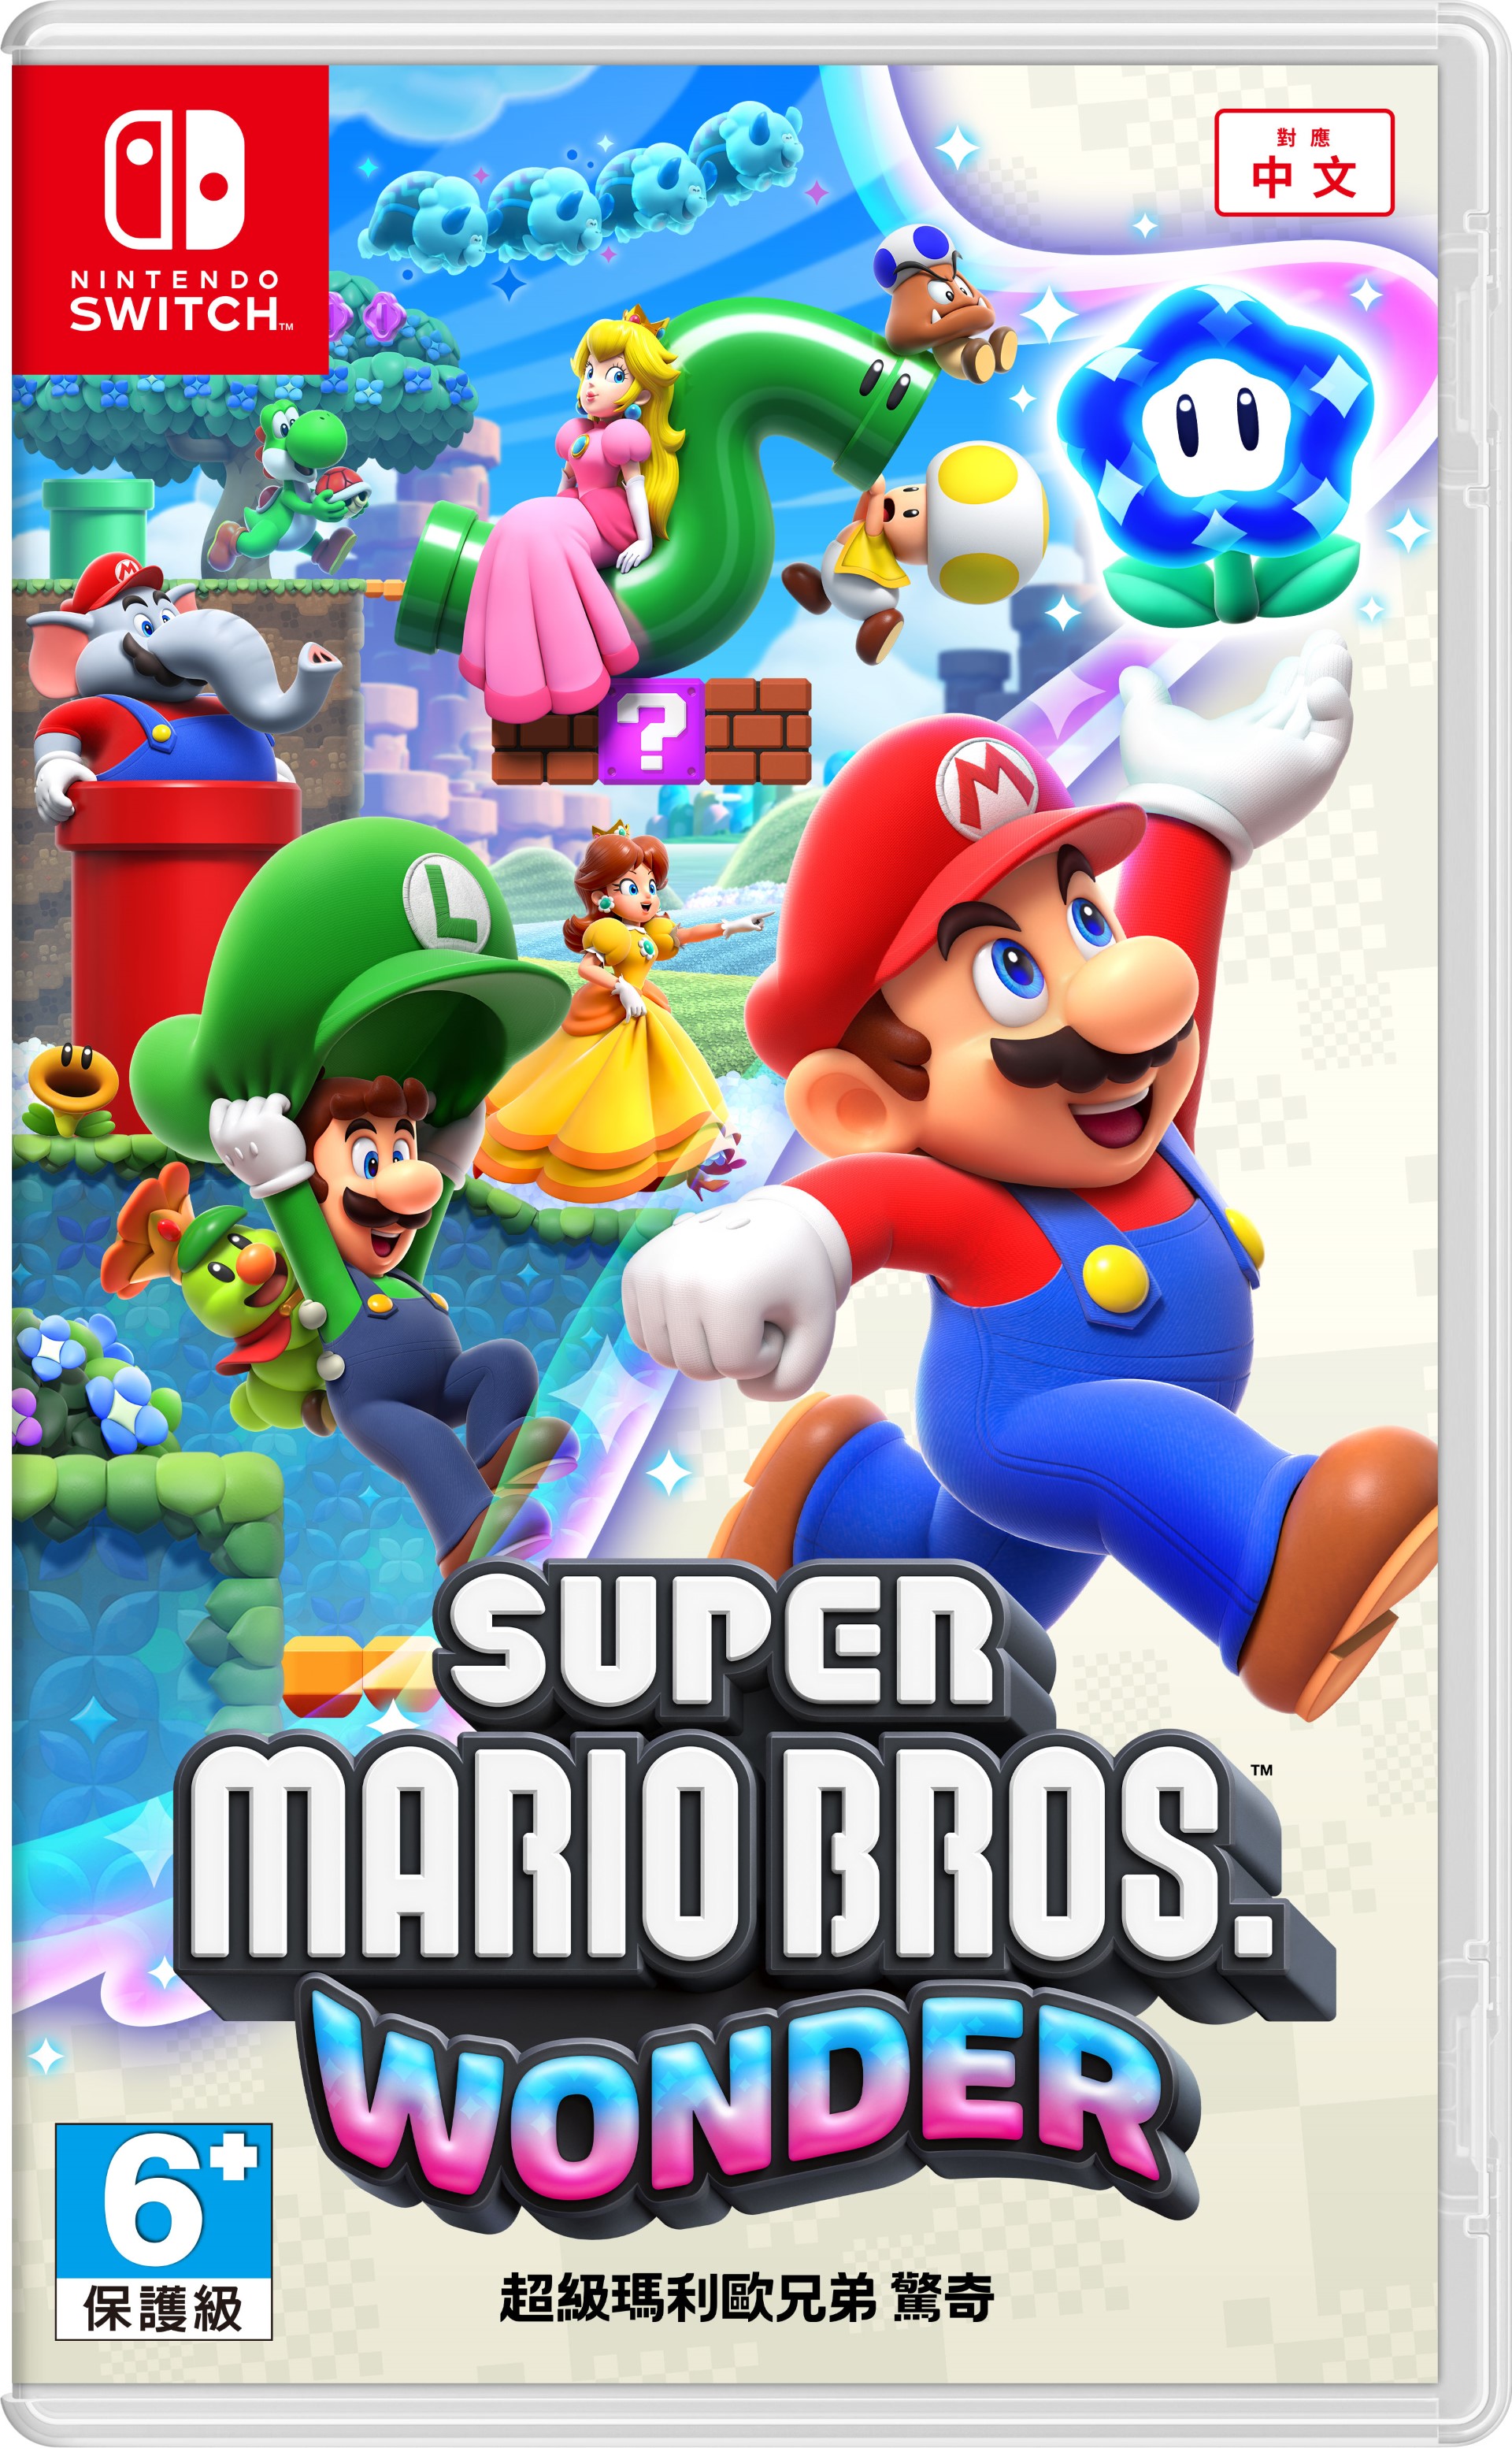 Nintendo Switch遊戲軟體 - 《超級瑪利歐兄弟 驚奇》